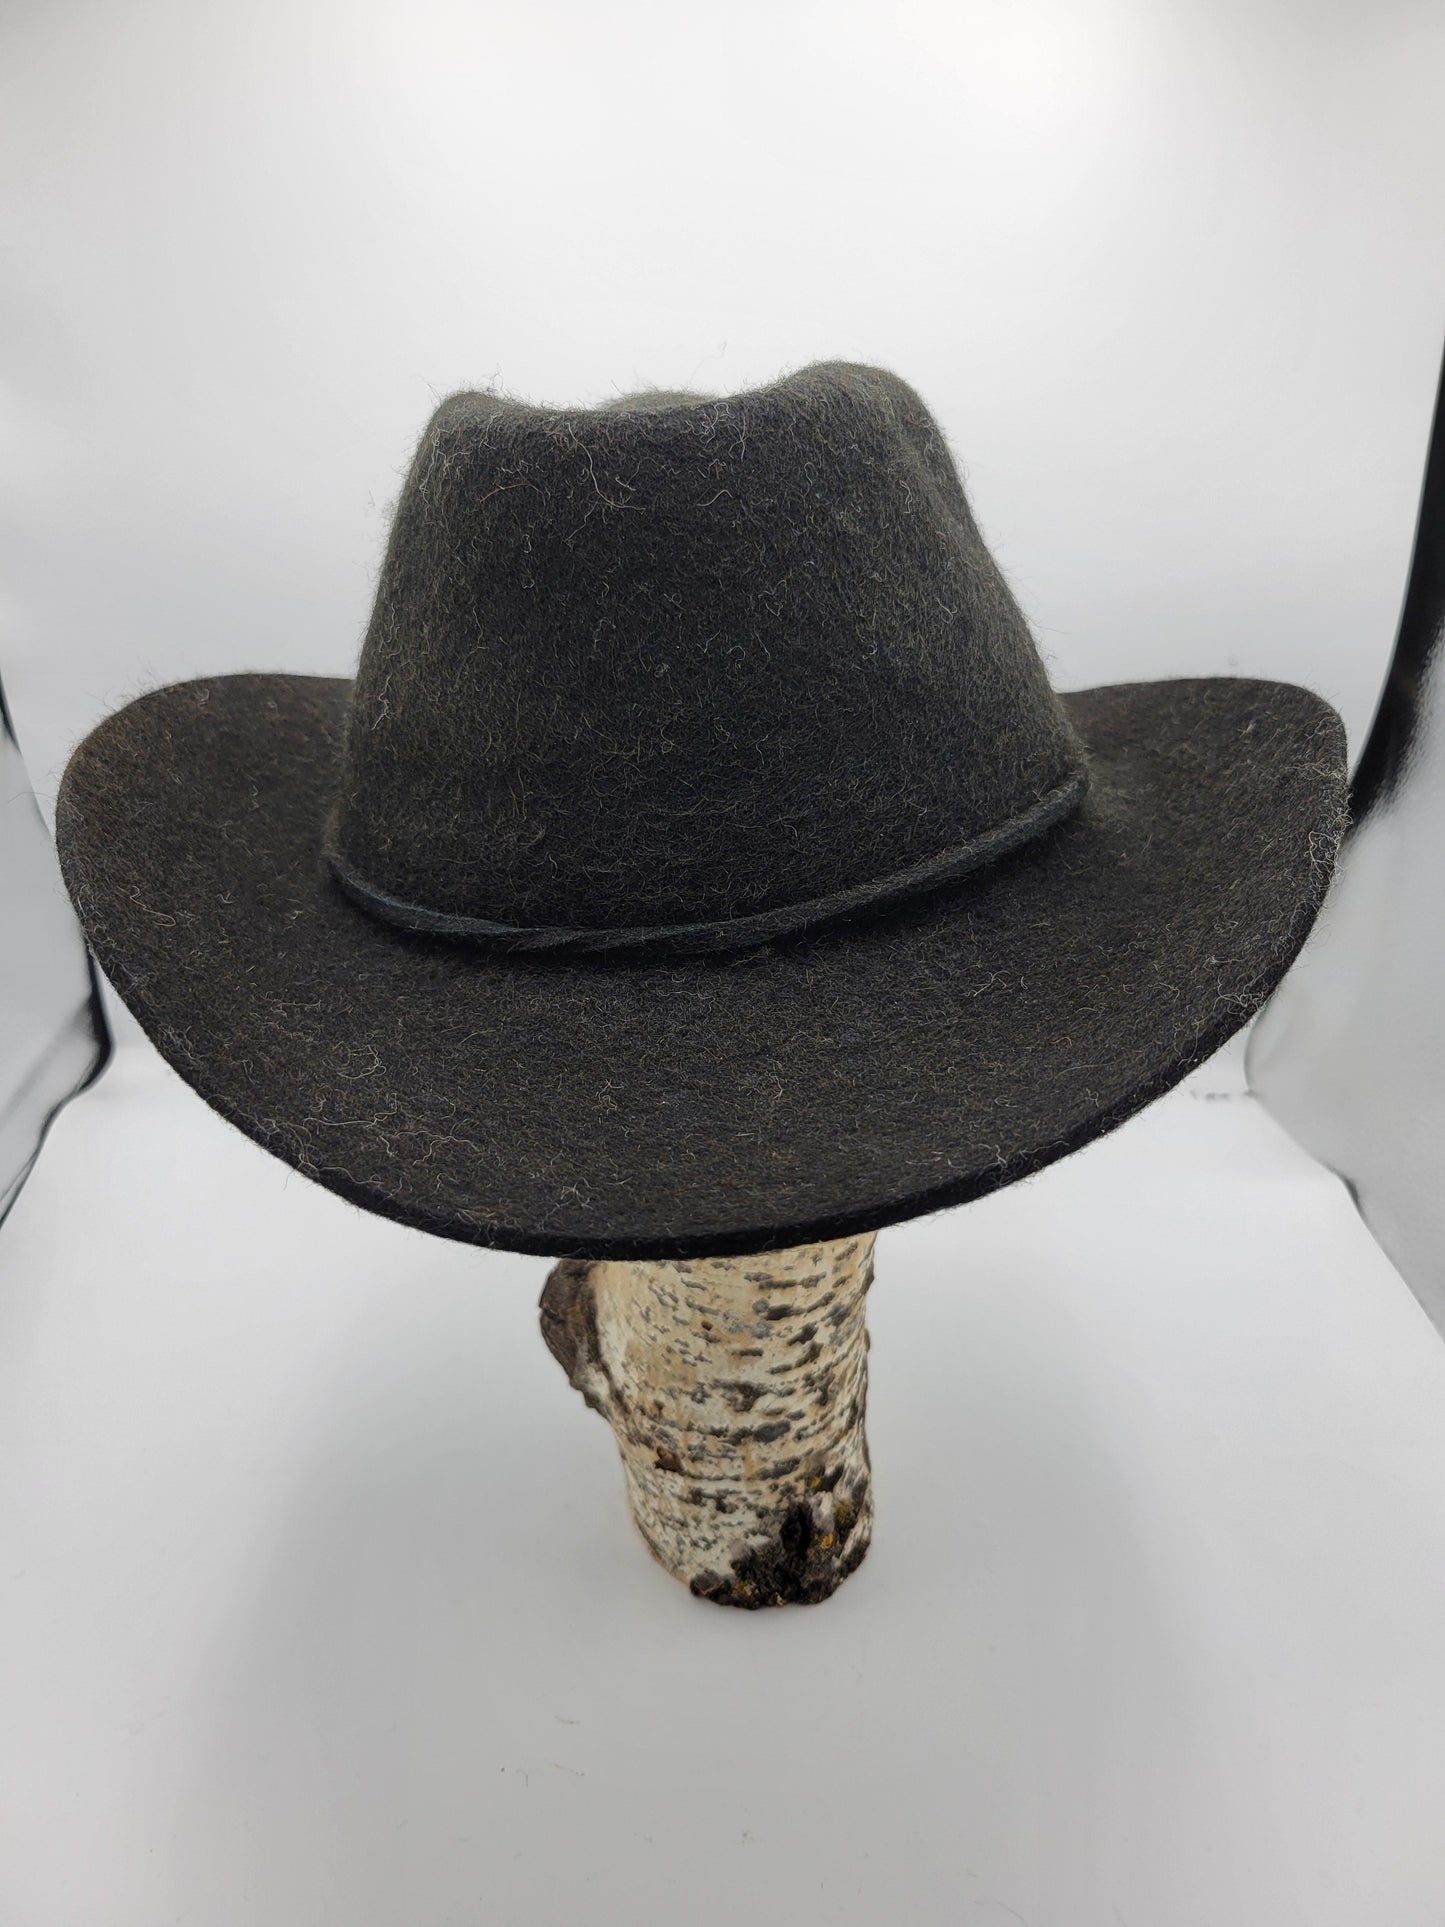 Felted Cowboy hats